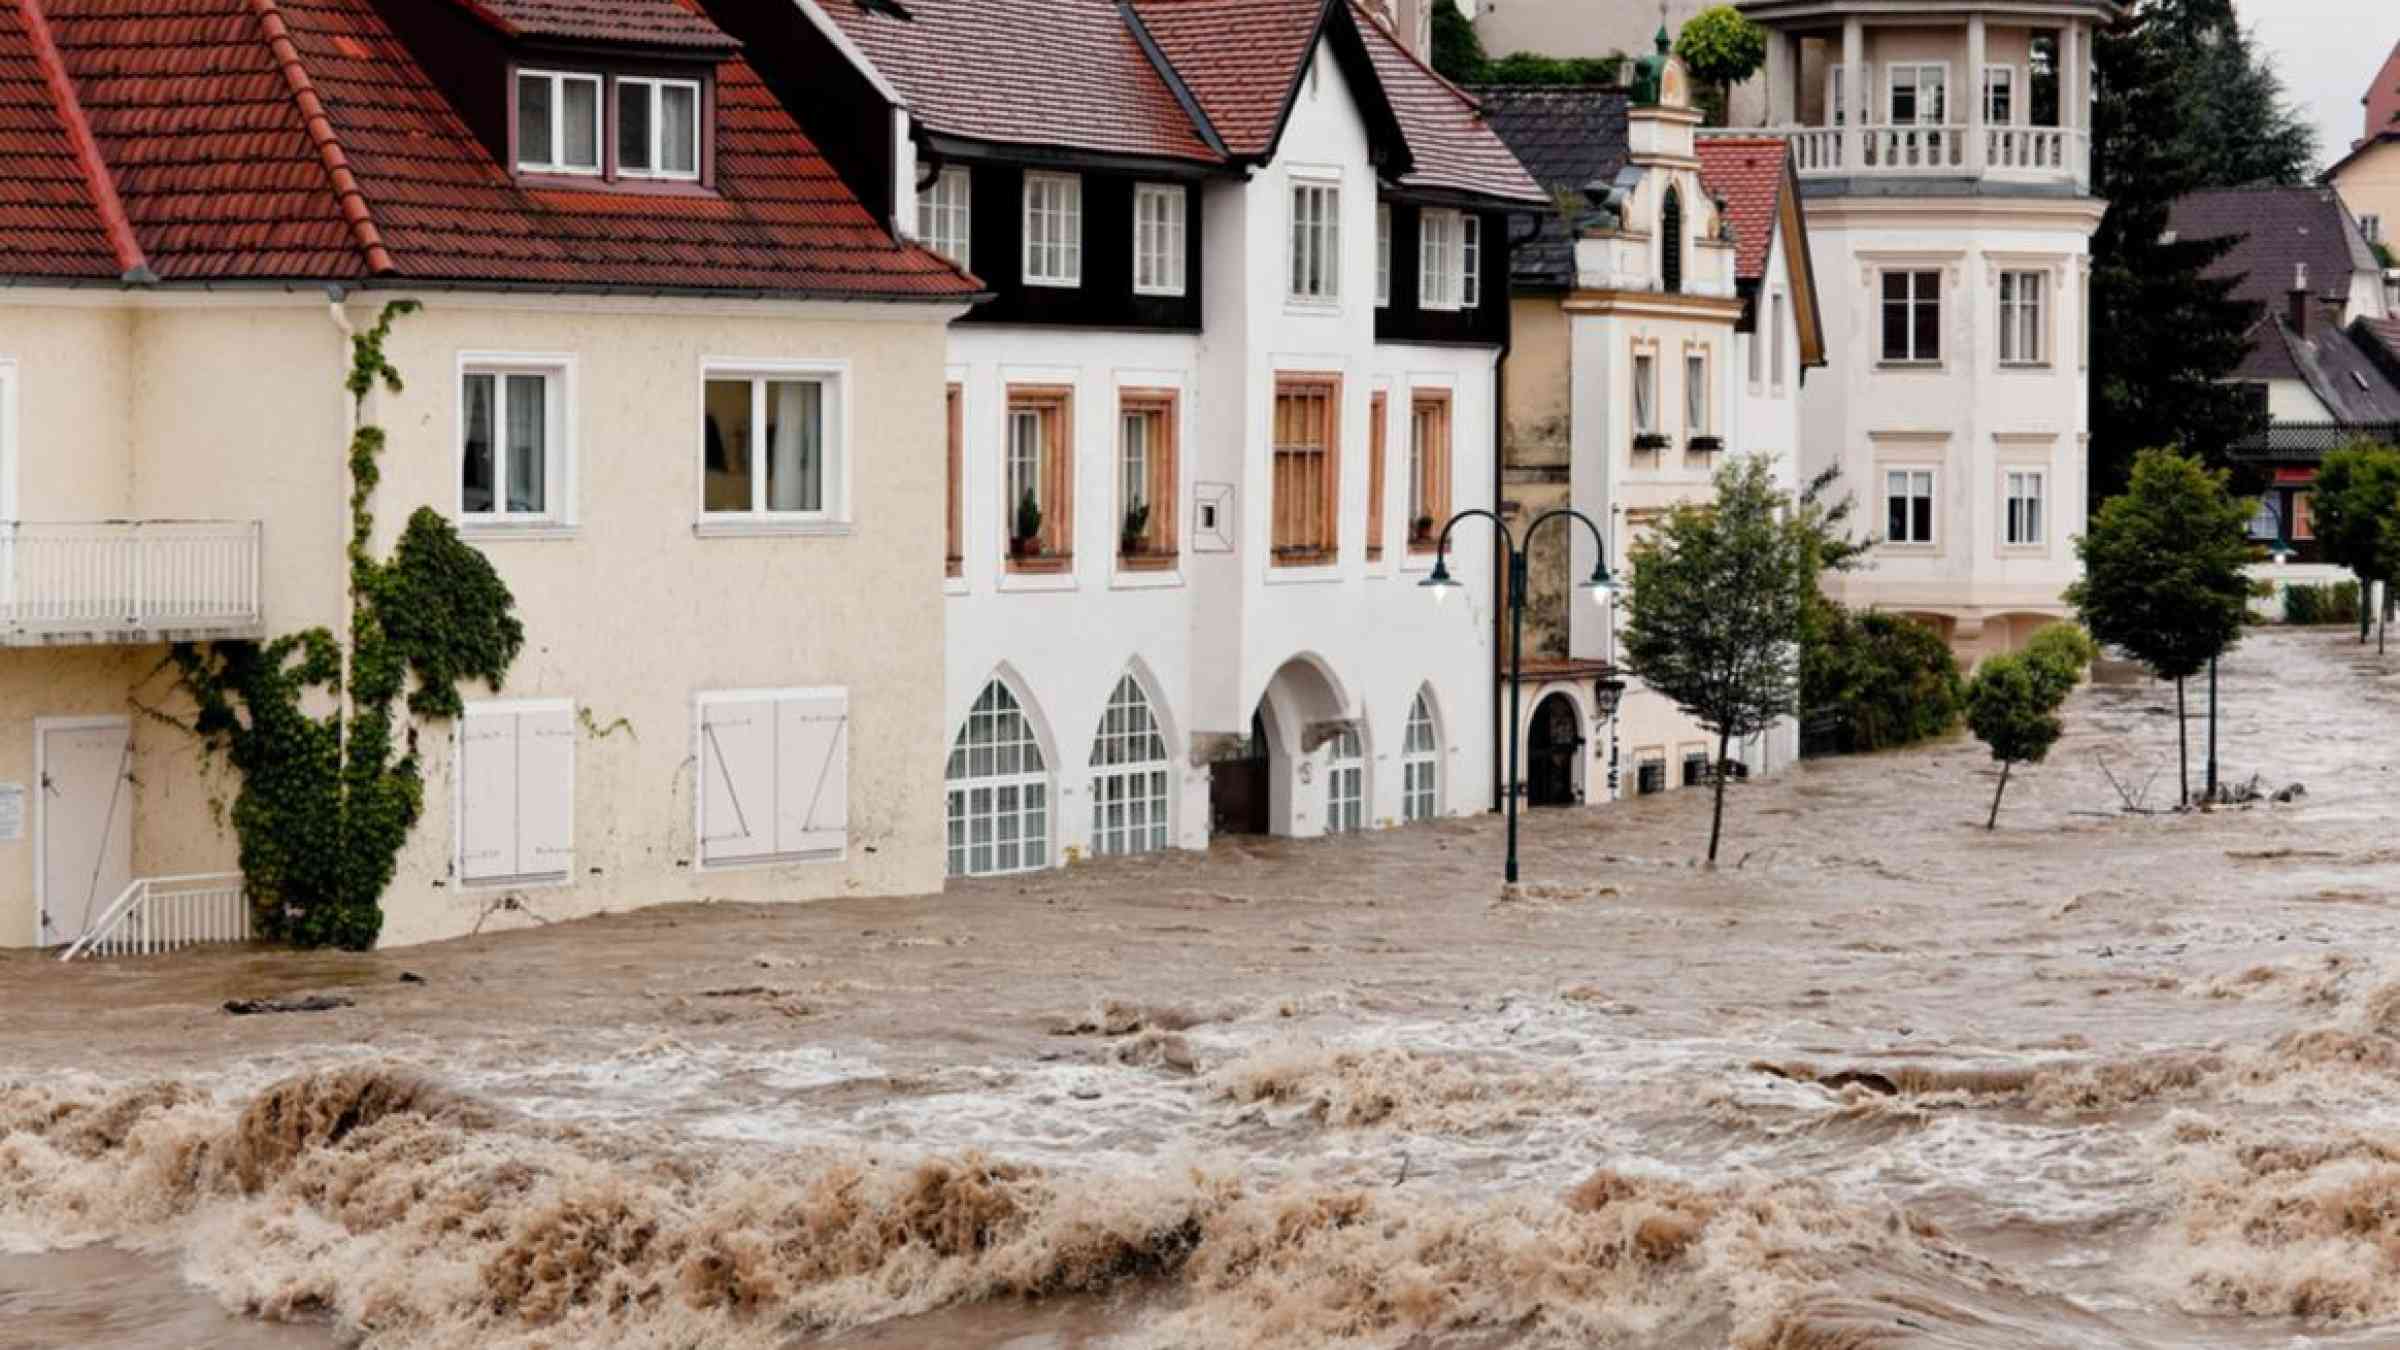 Floods in Steyr, Austria in 2009. Lisa-S/Shutterstock